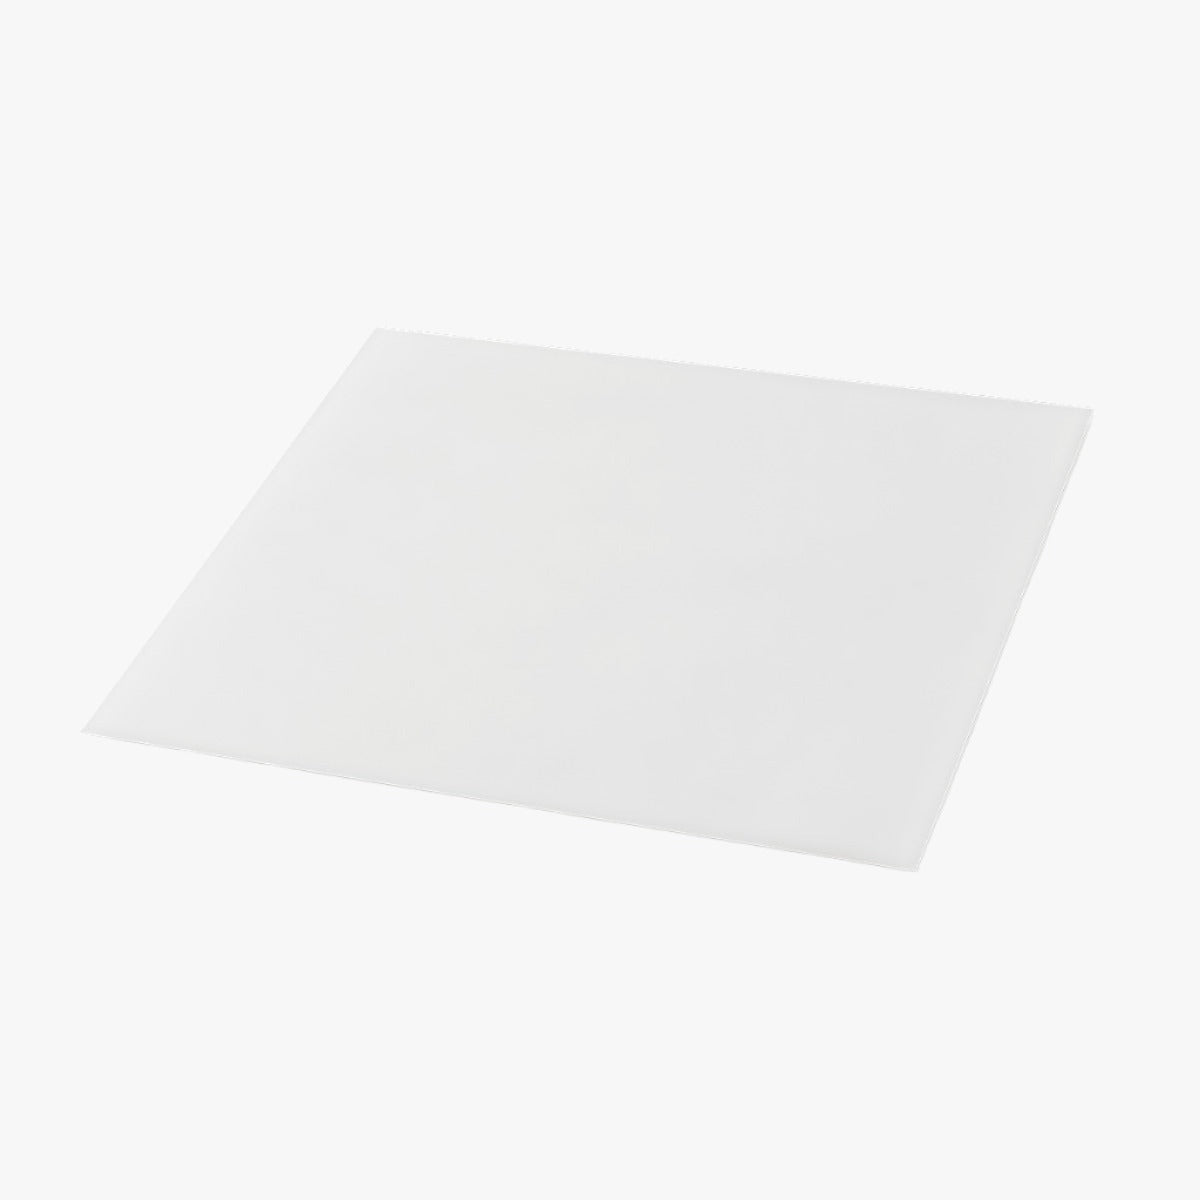 Steroplast Steropad Compresses Sterile 10 x 10 cm 25 pcs